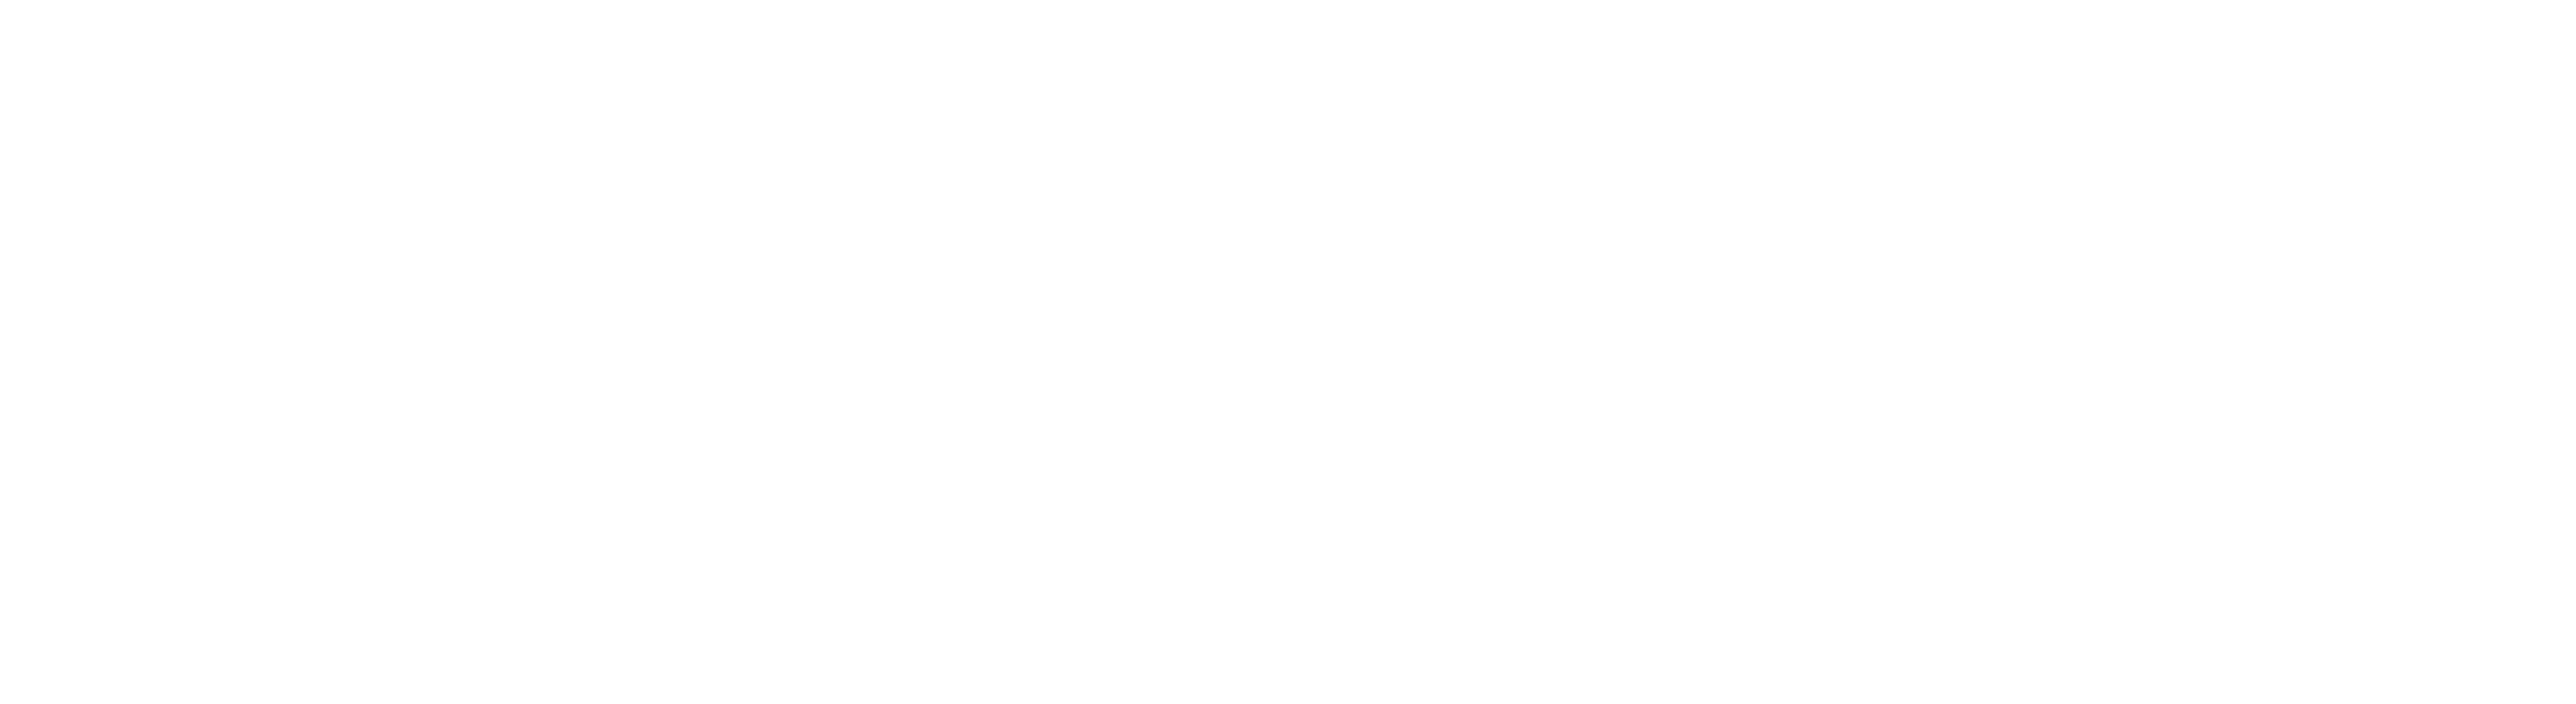 New Yorker  logo